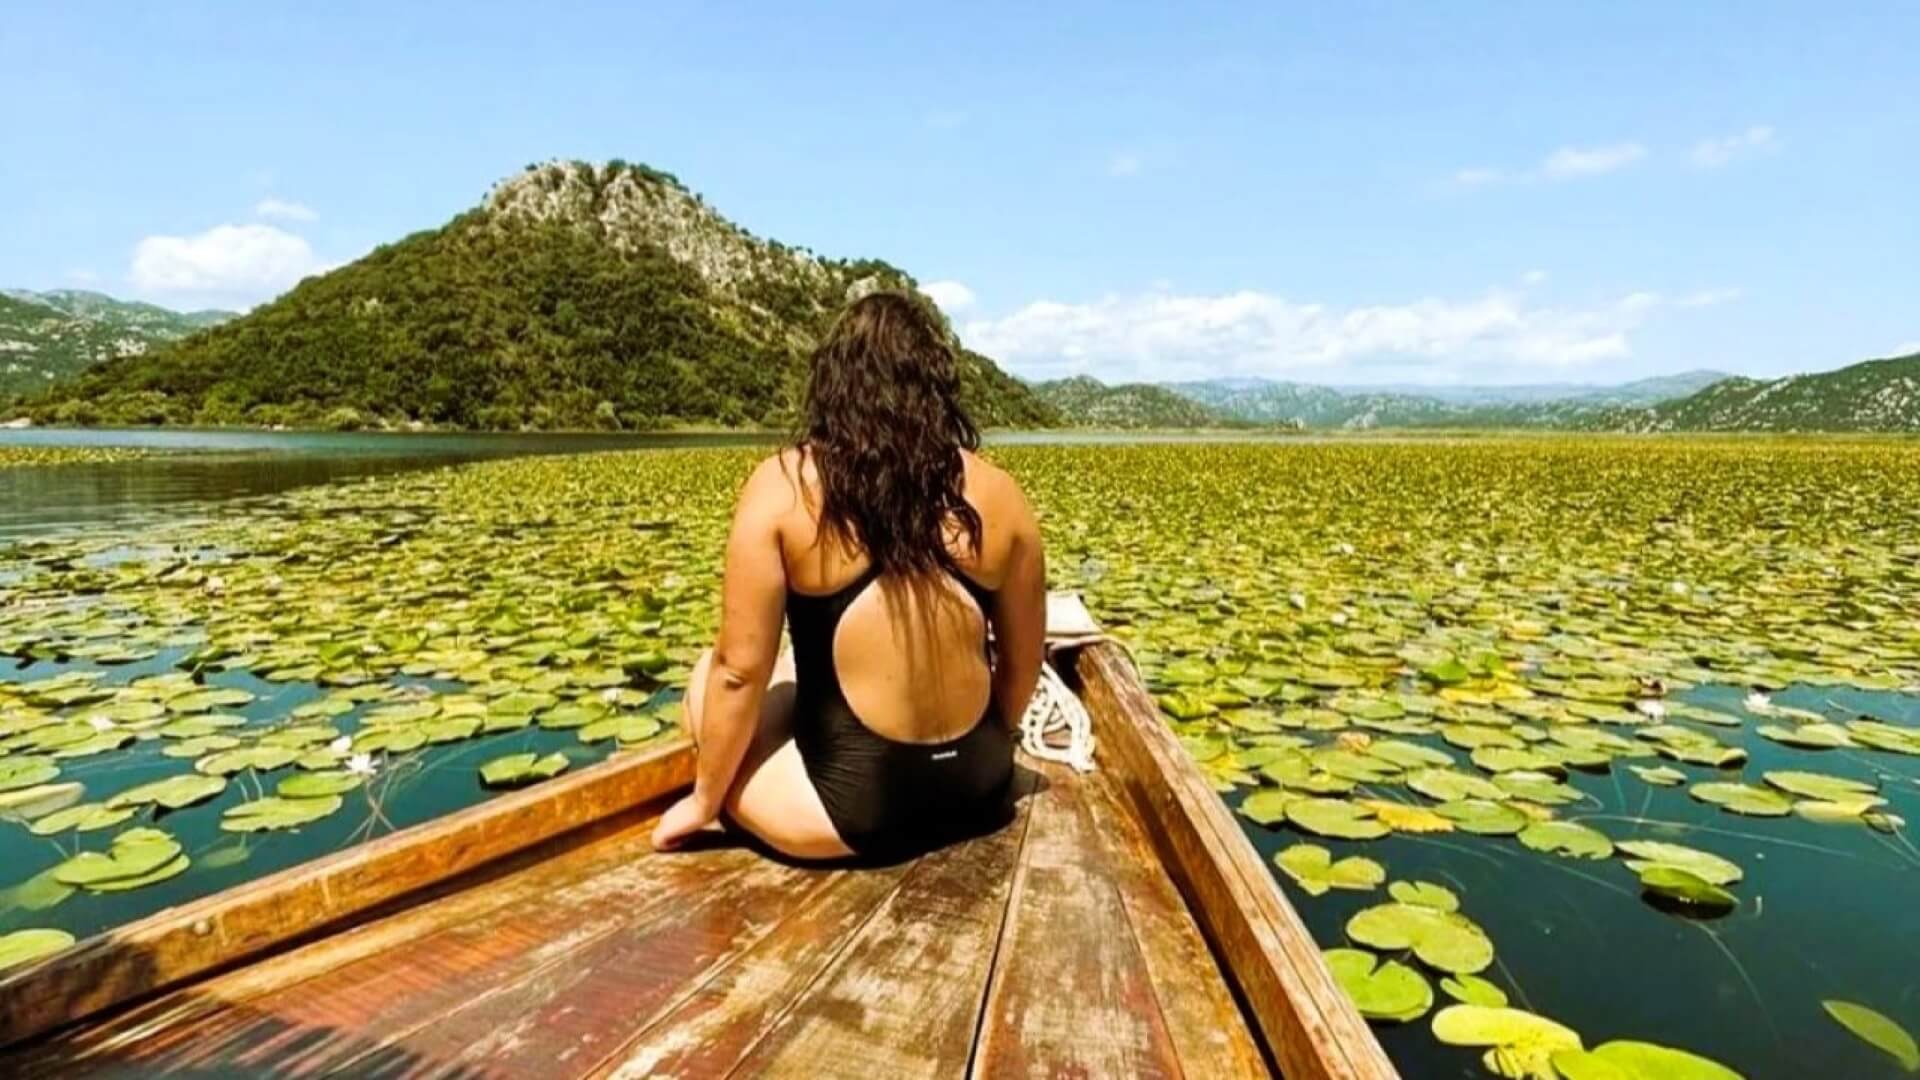 Enjoying the beauty of Skadar lake, tucked inside a traditional wooden boat